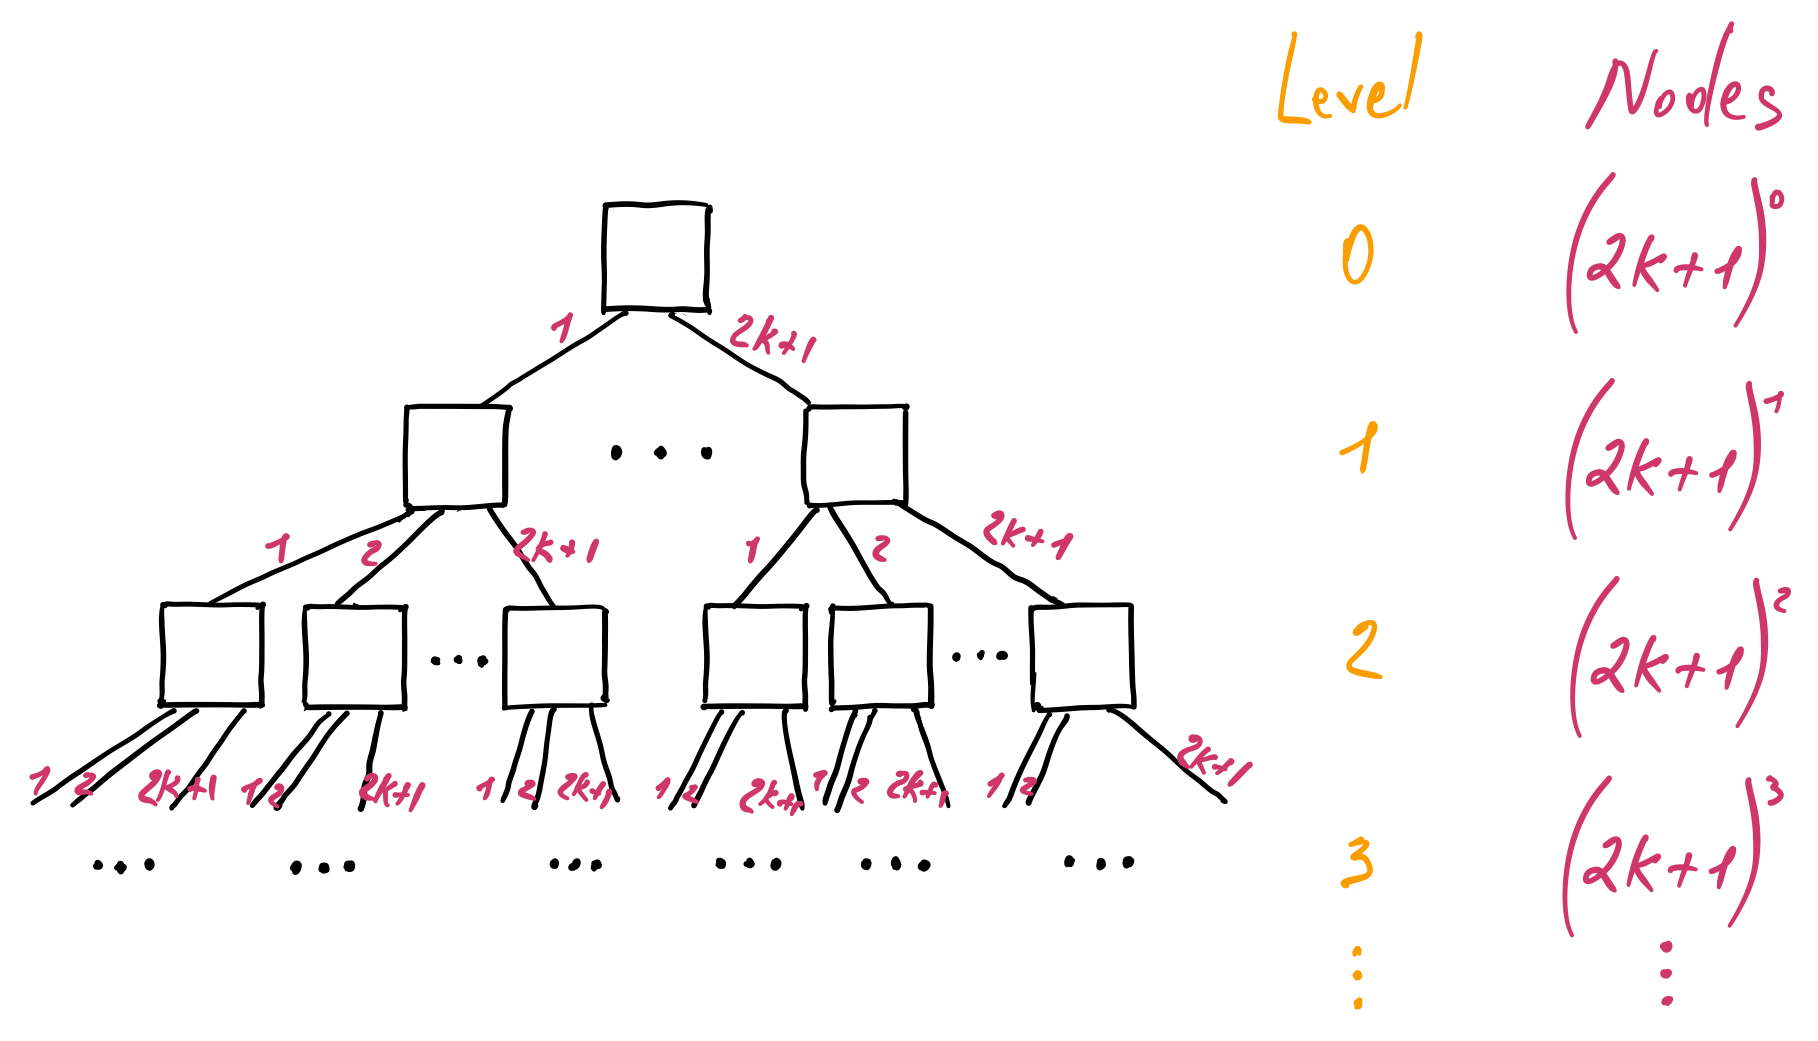 B-tree max nodes